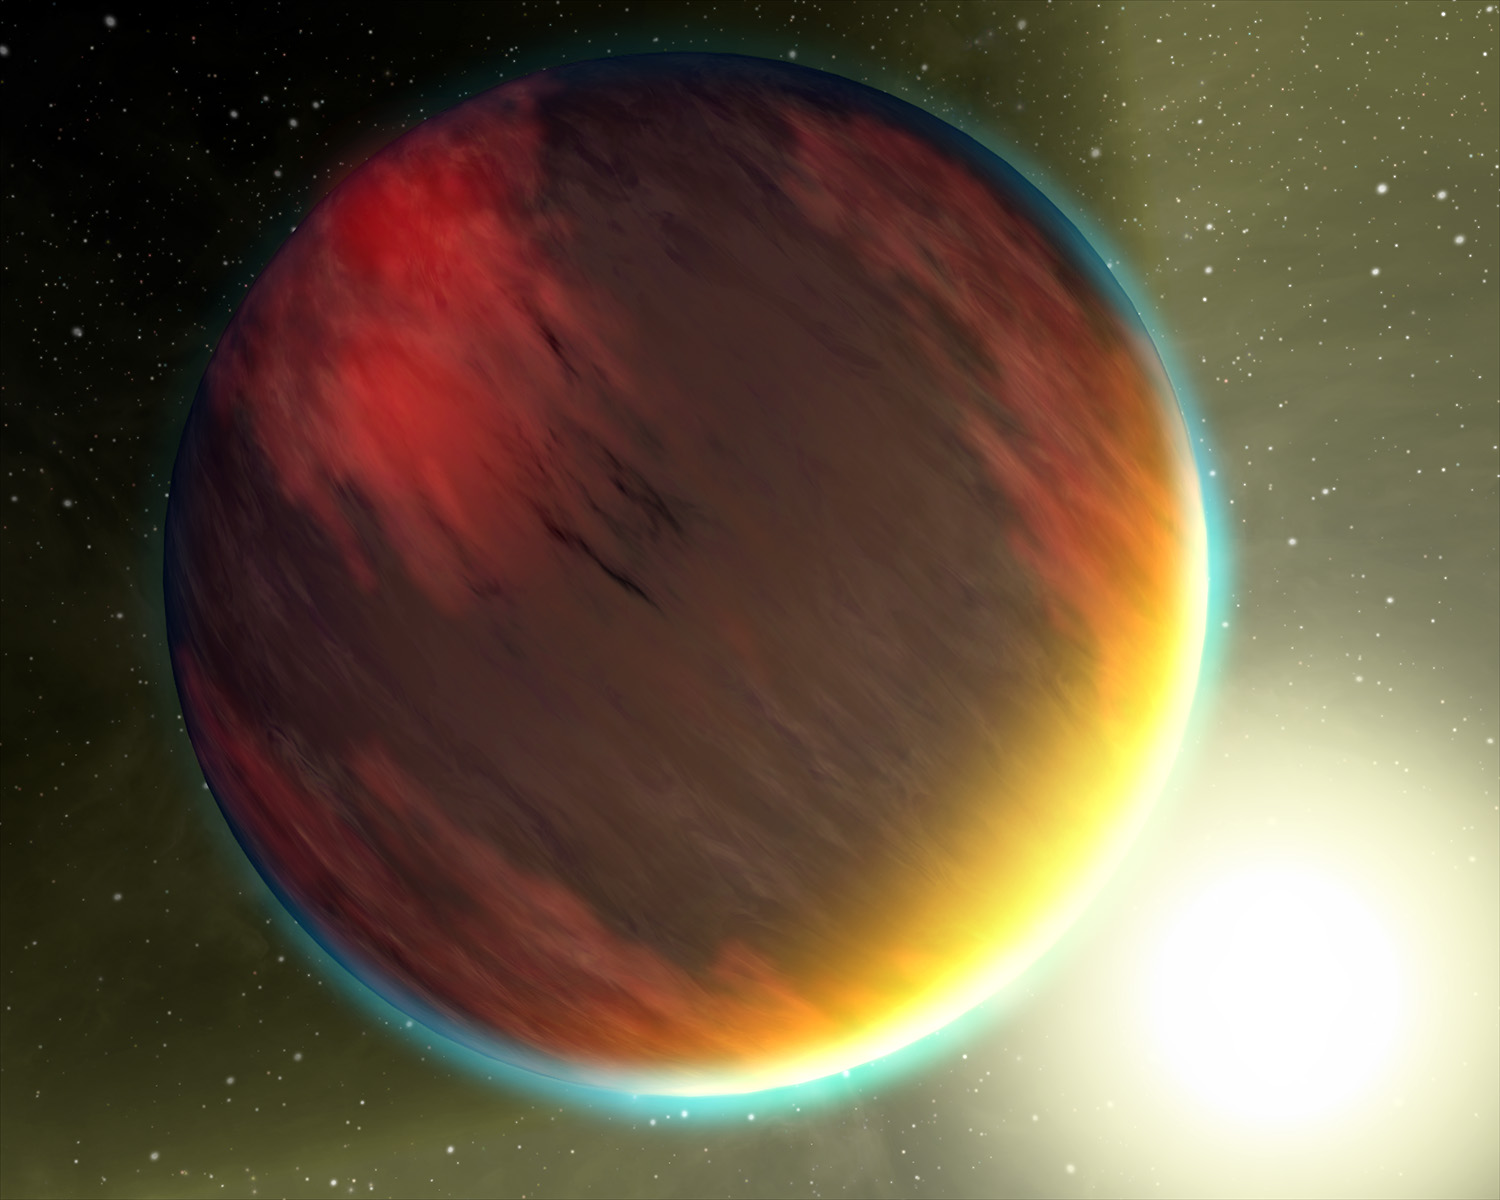 Artist’s rendering of hot gas planet HD209458b.